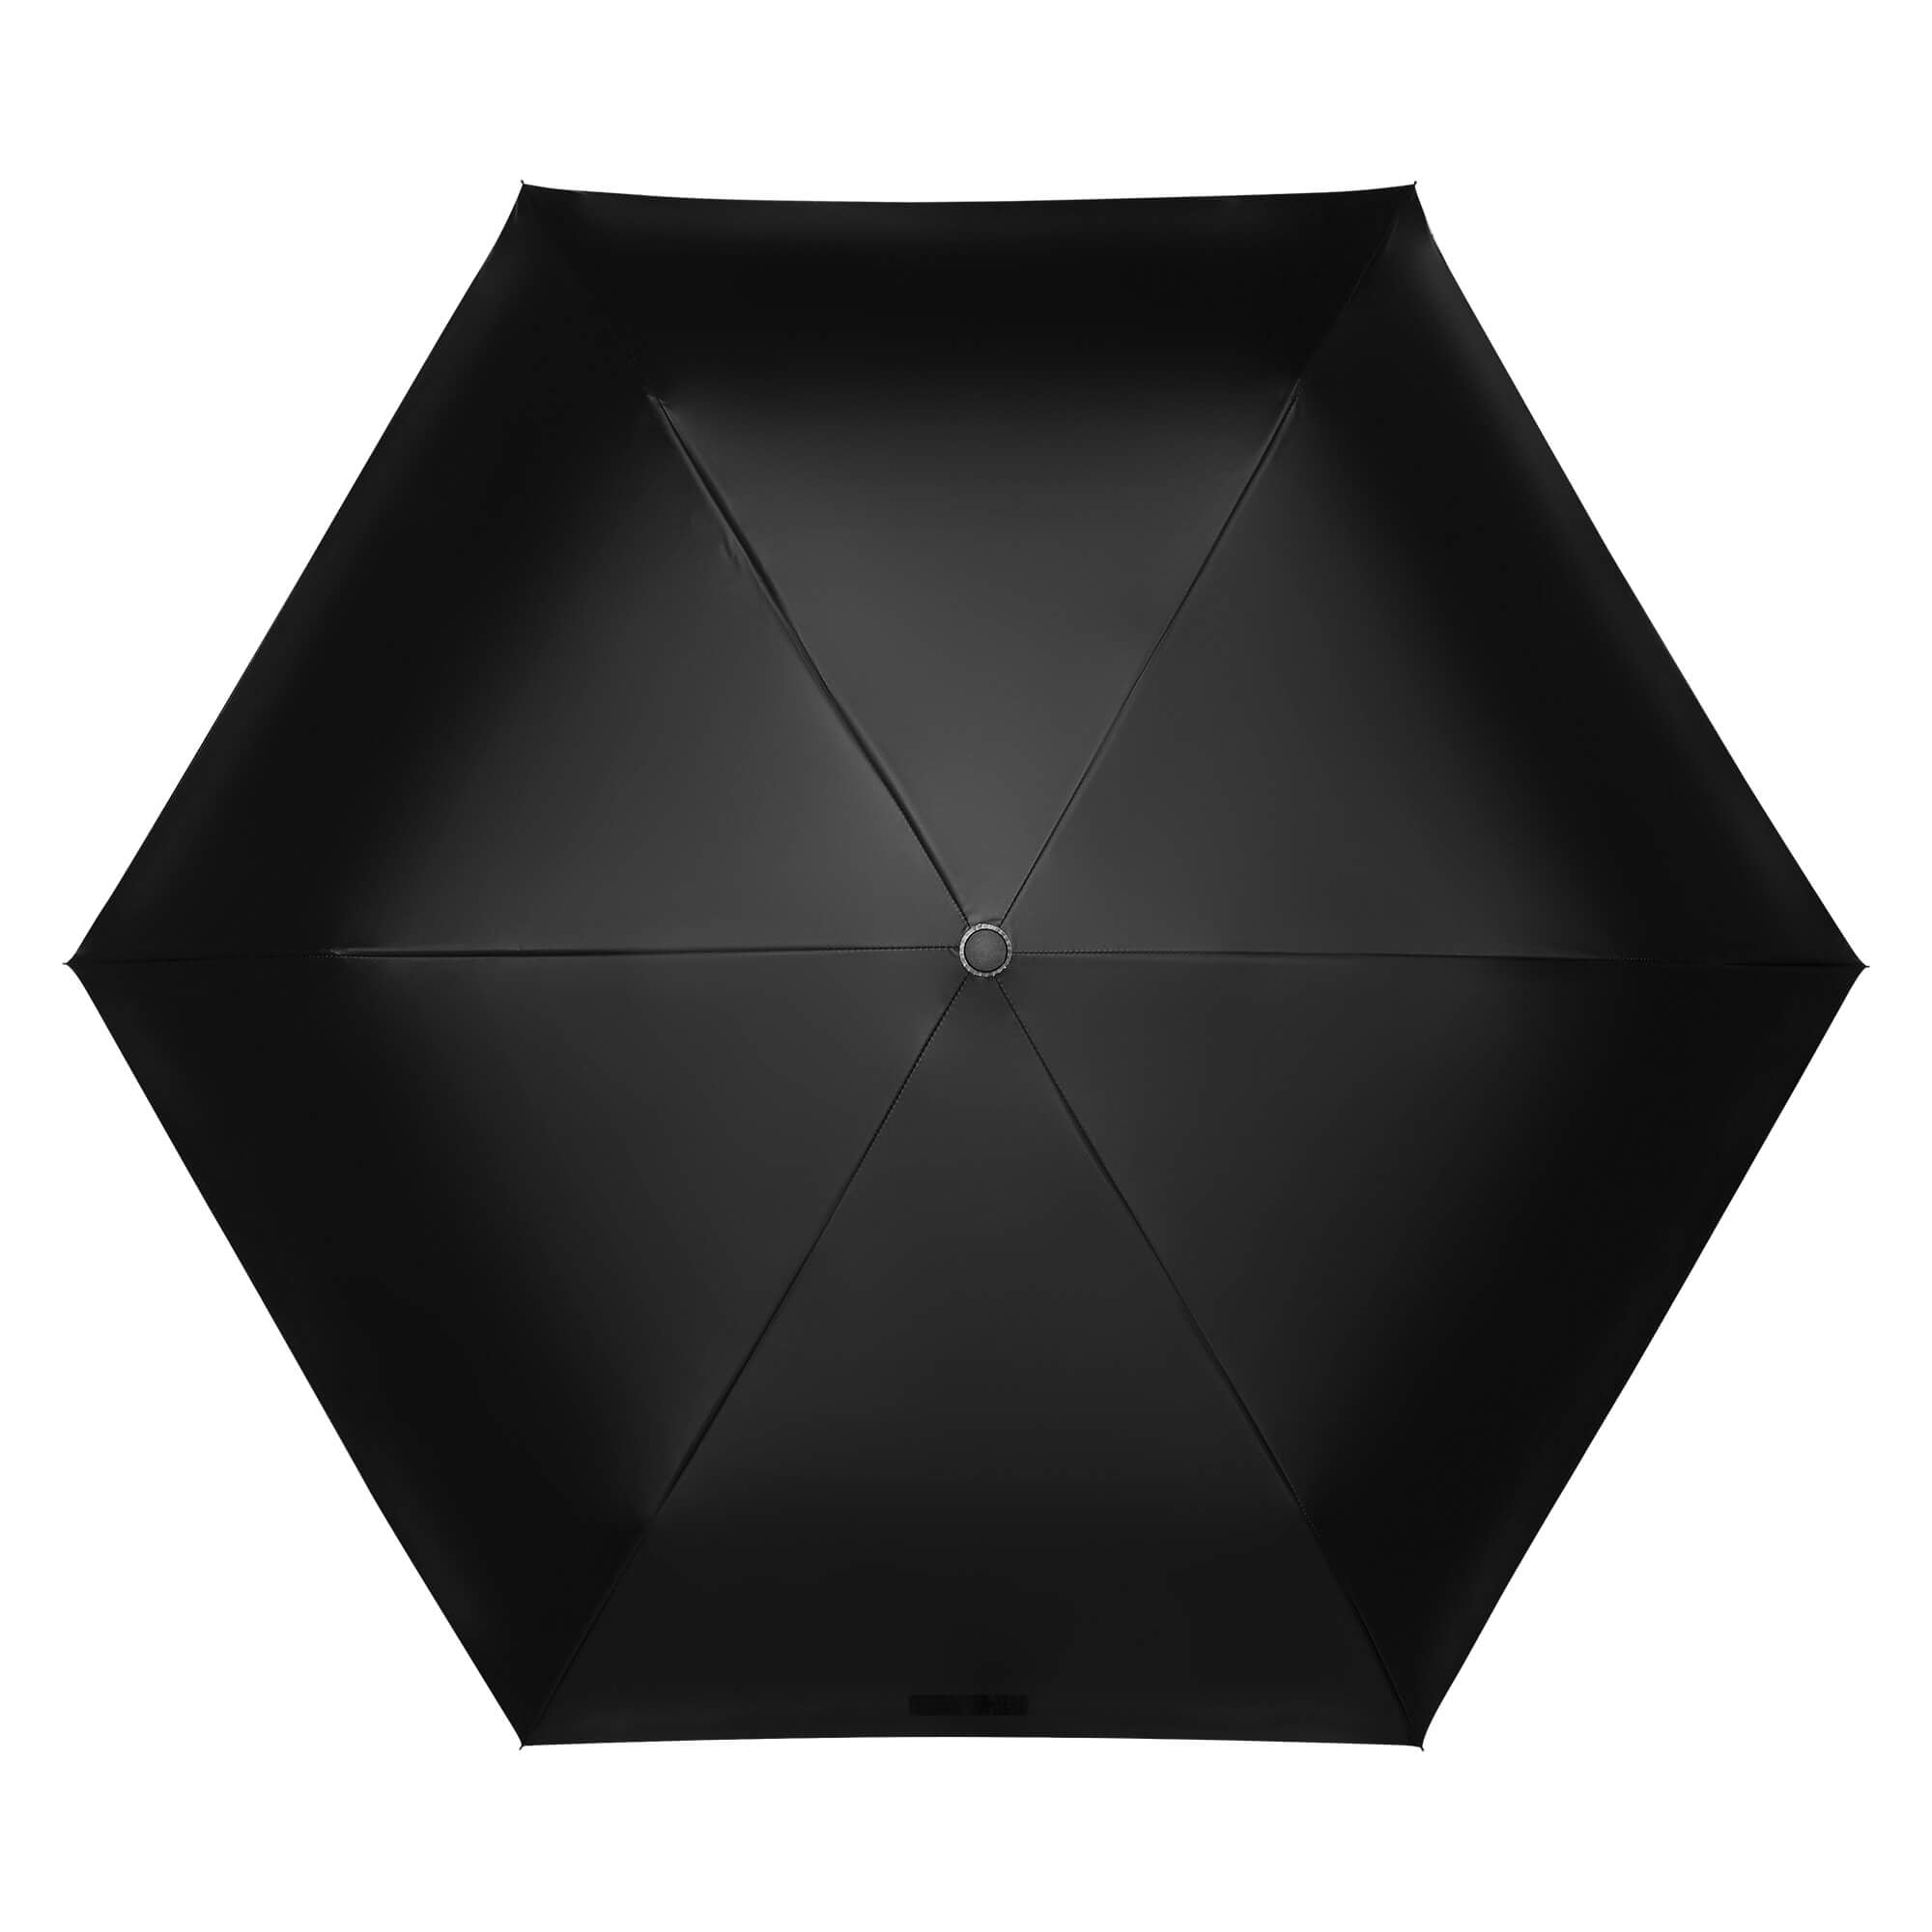 Blue Diamond Fully Automatic Umbrella with Design Inside